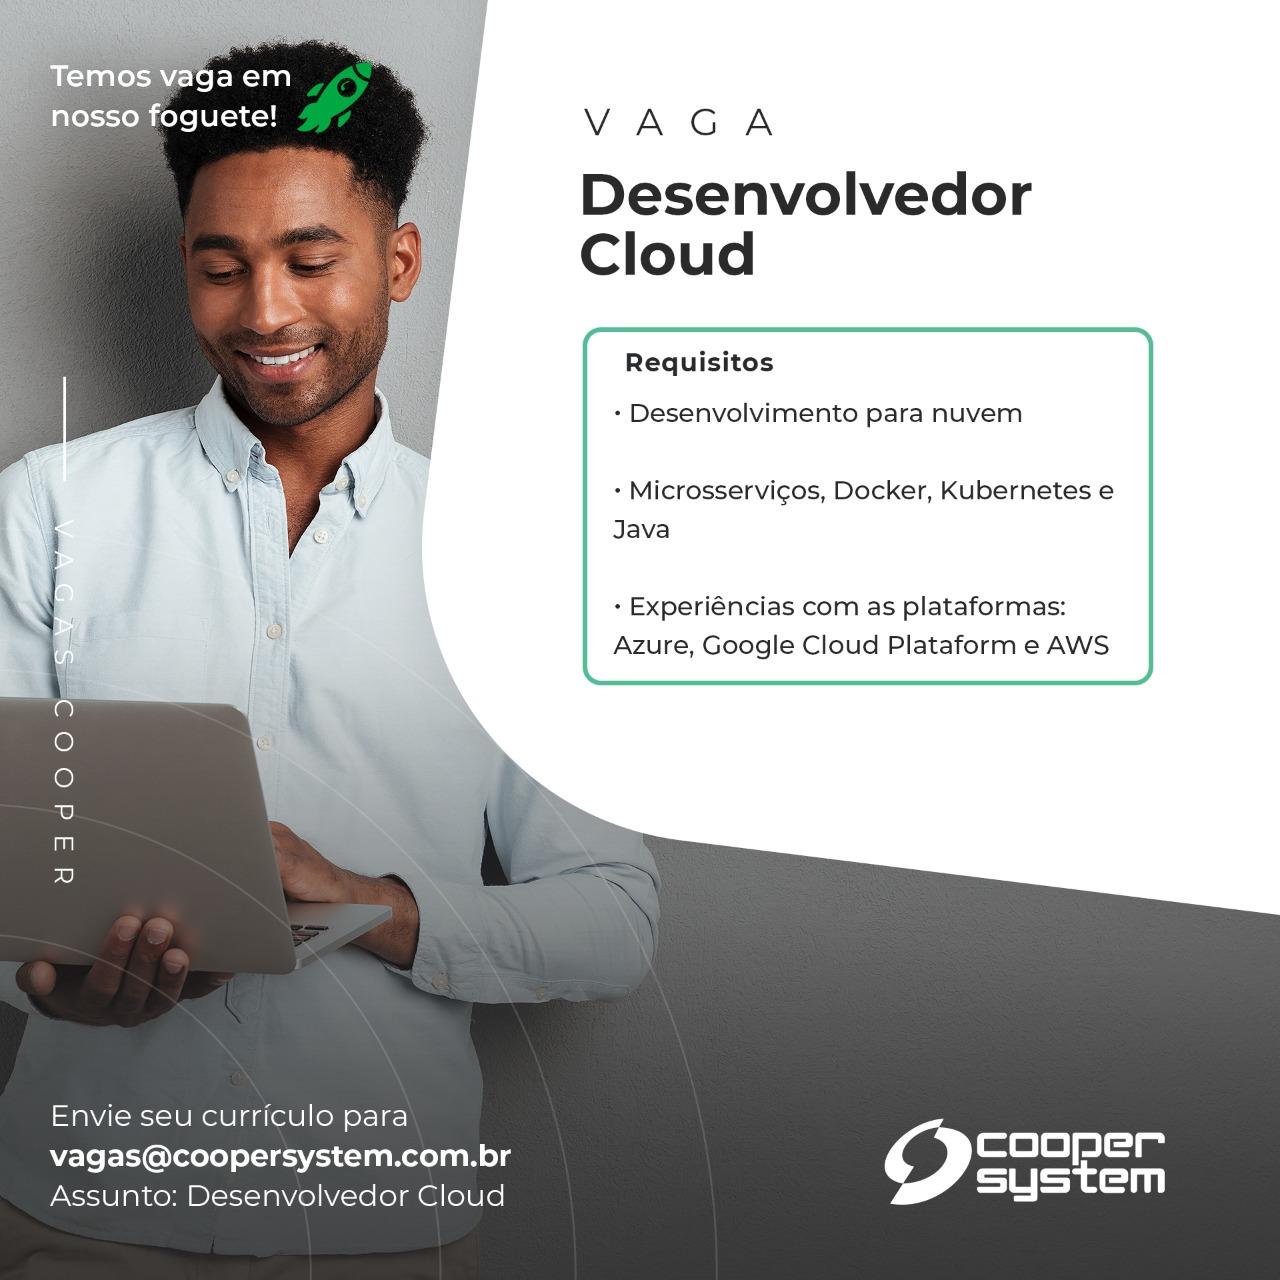 [leonardoti] Desenvolvedor Cloud